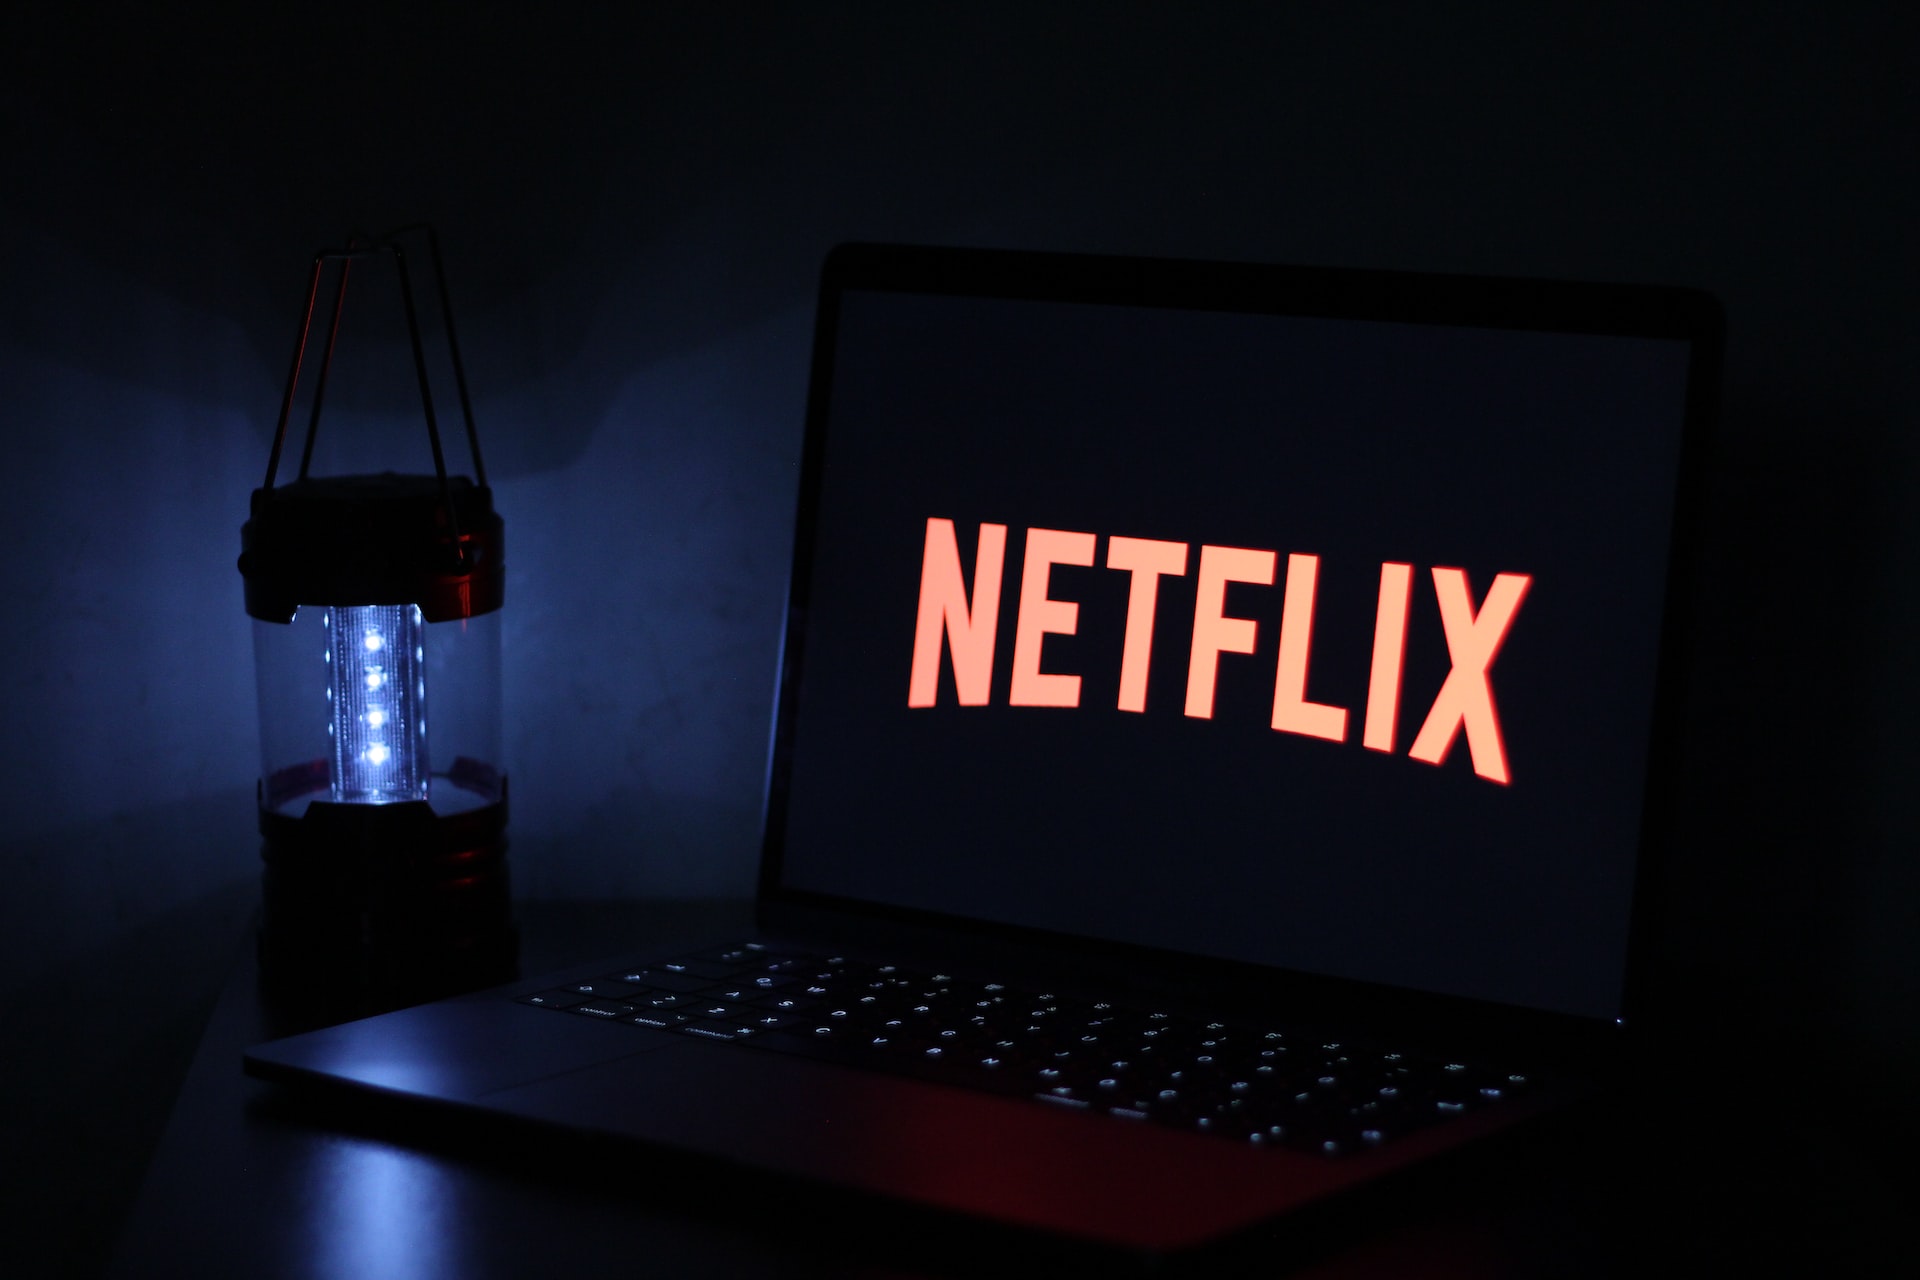 Netflix perde inscritores para concorrentes